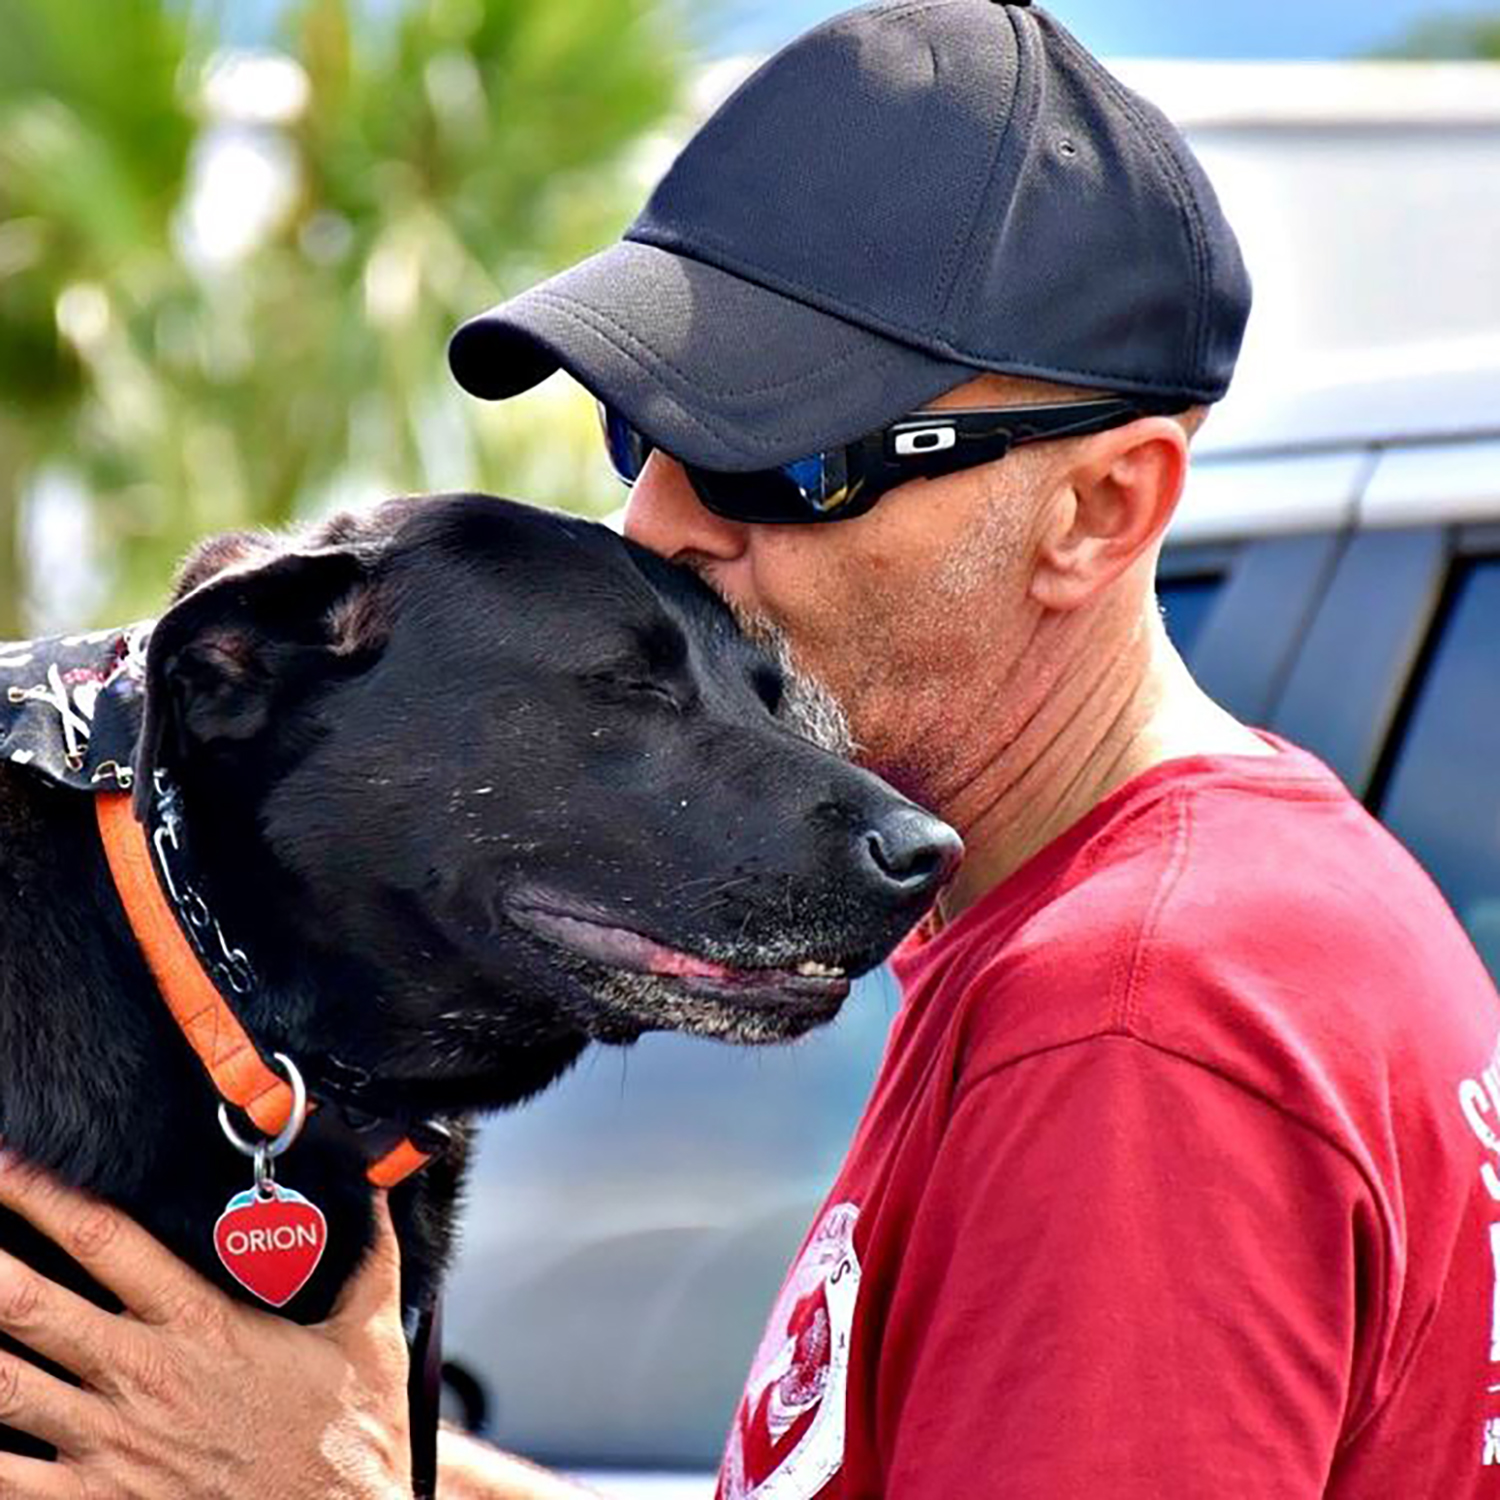 a man wearing a baseball cap kisses a dog